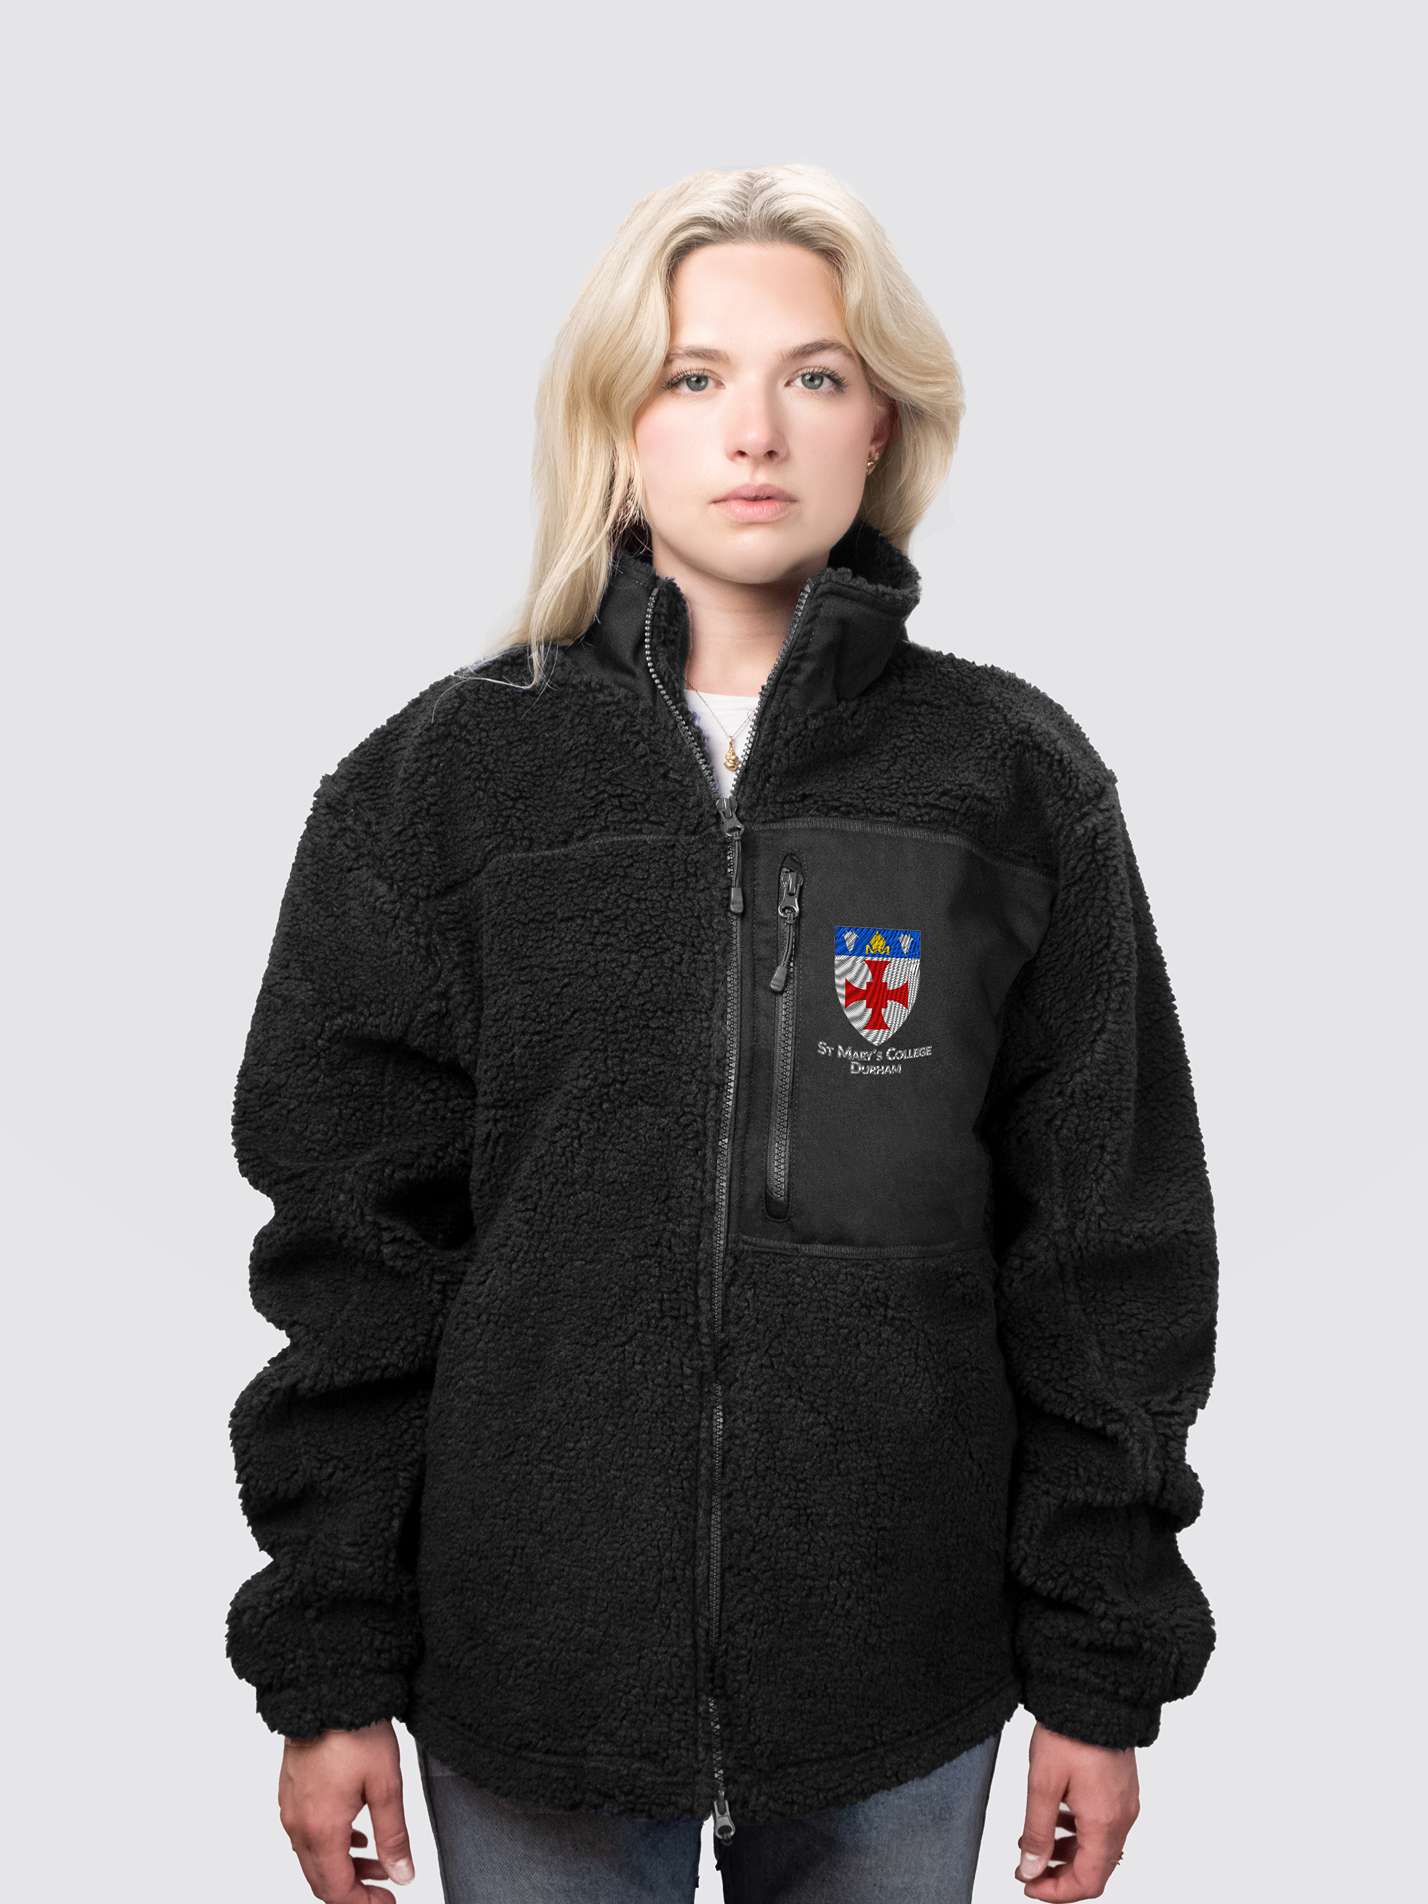 St Mary's College Durham Unisex Fluffy Sherpa Fleece Jacket